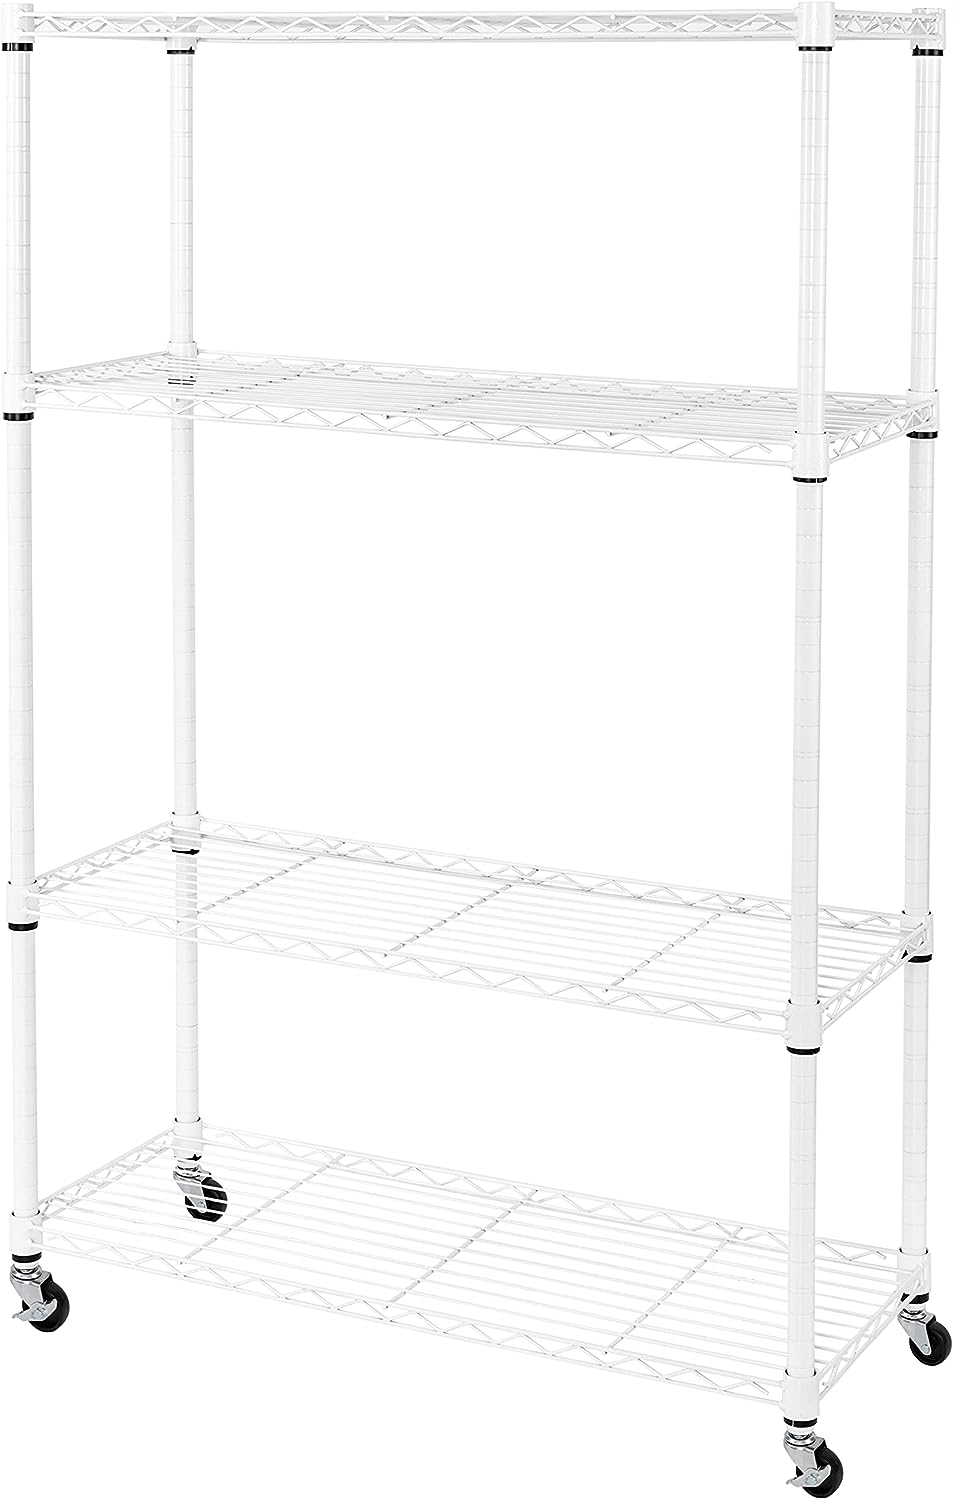 Mainstays Folding Metal Kitchen Pantry Organization Wire Shelf, White 